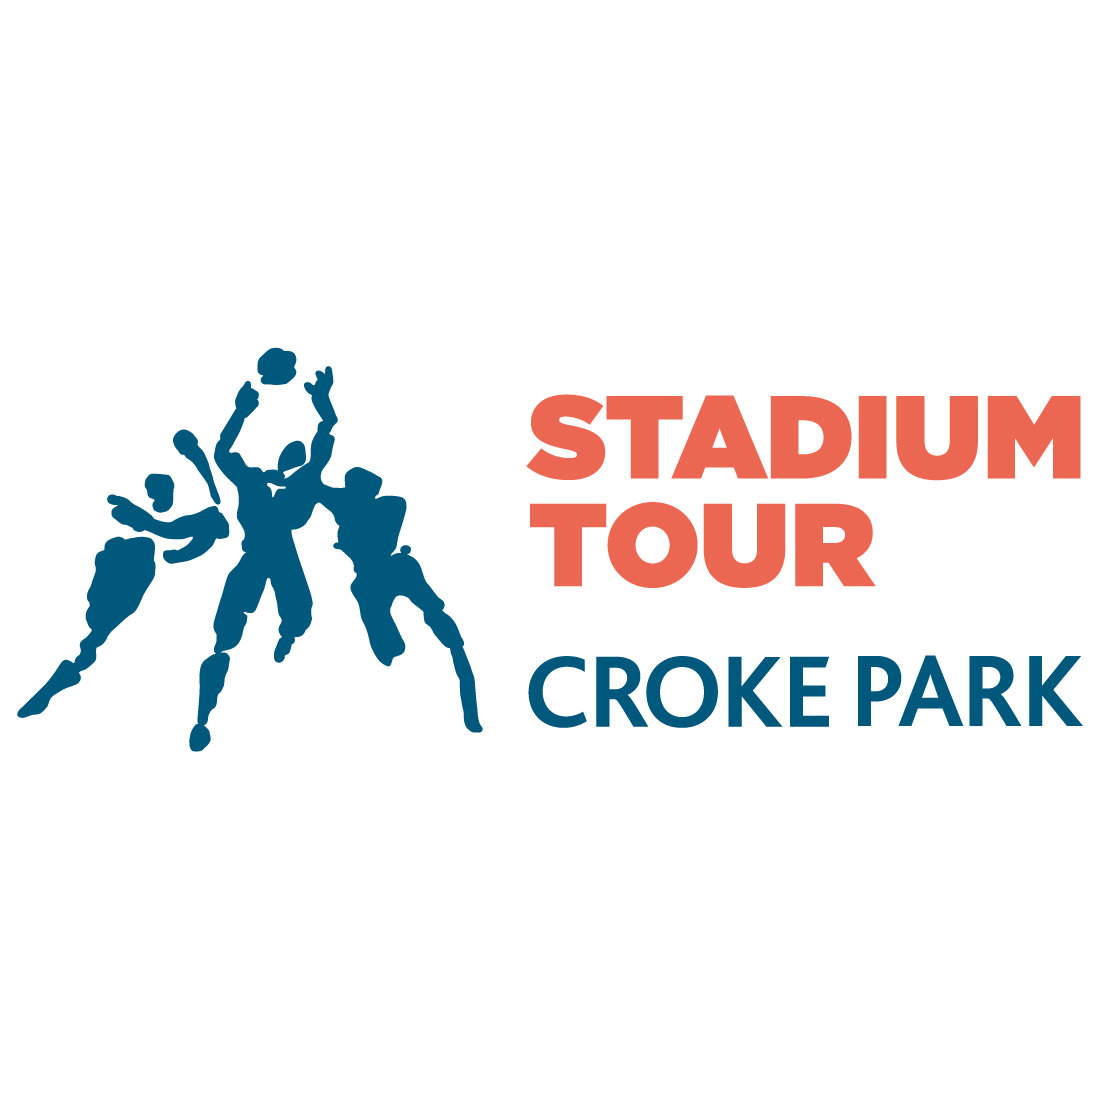 Croke Park Stadium Tour logo